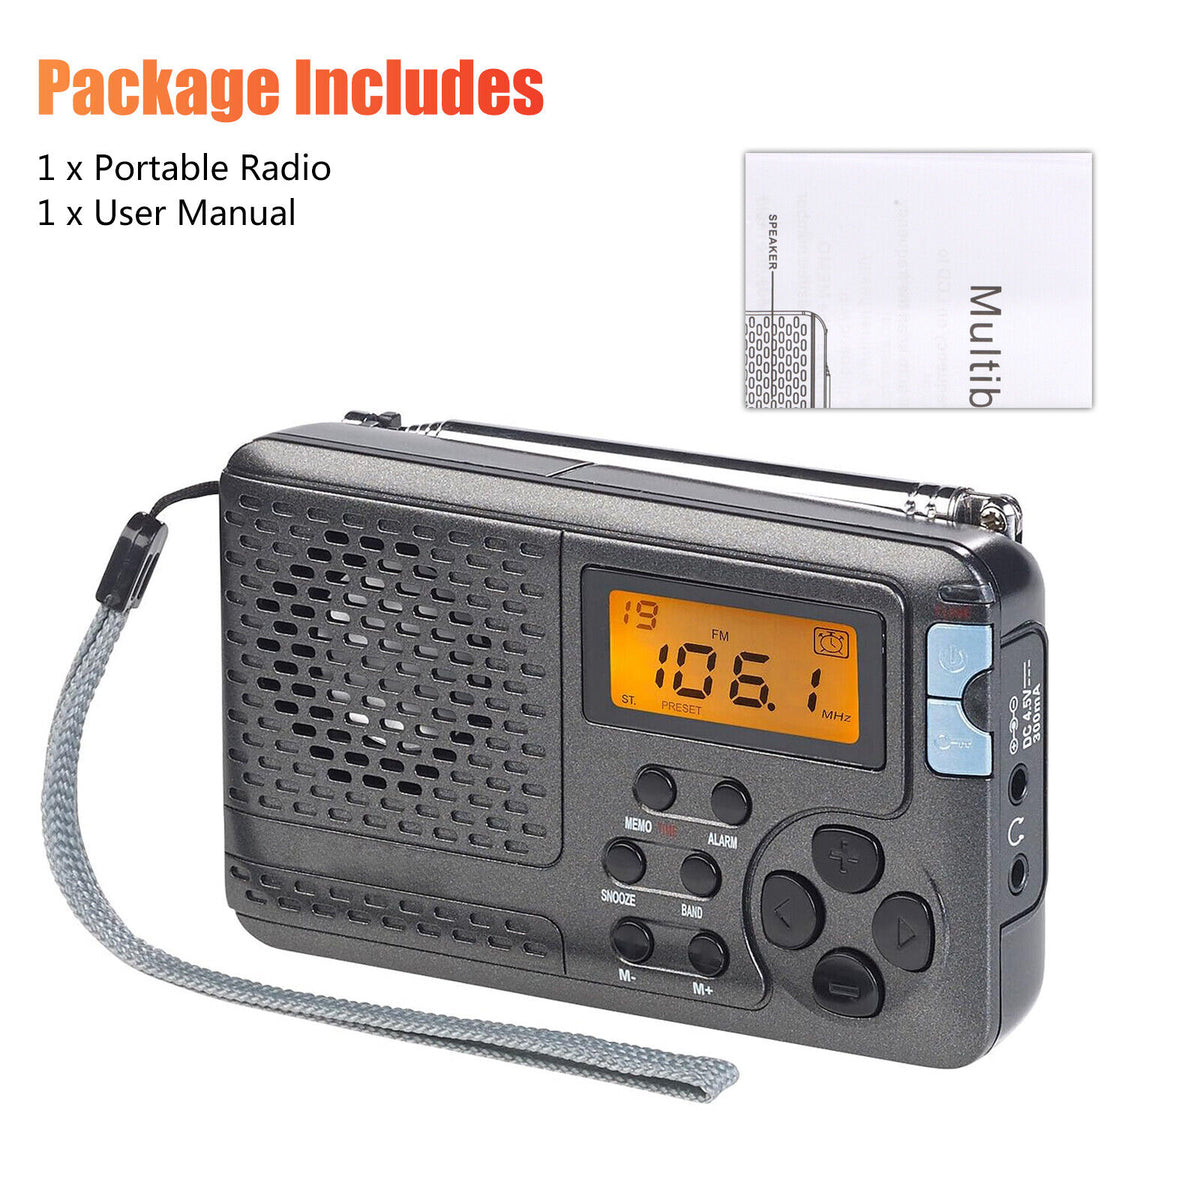 Portable AM/FM/SW/TV Radio Emergency Receiver with Digital LCD Display